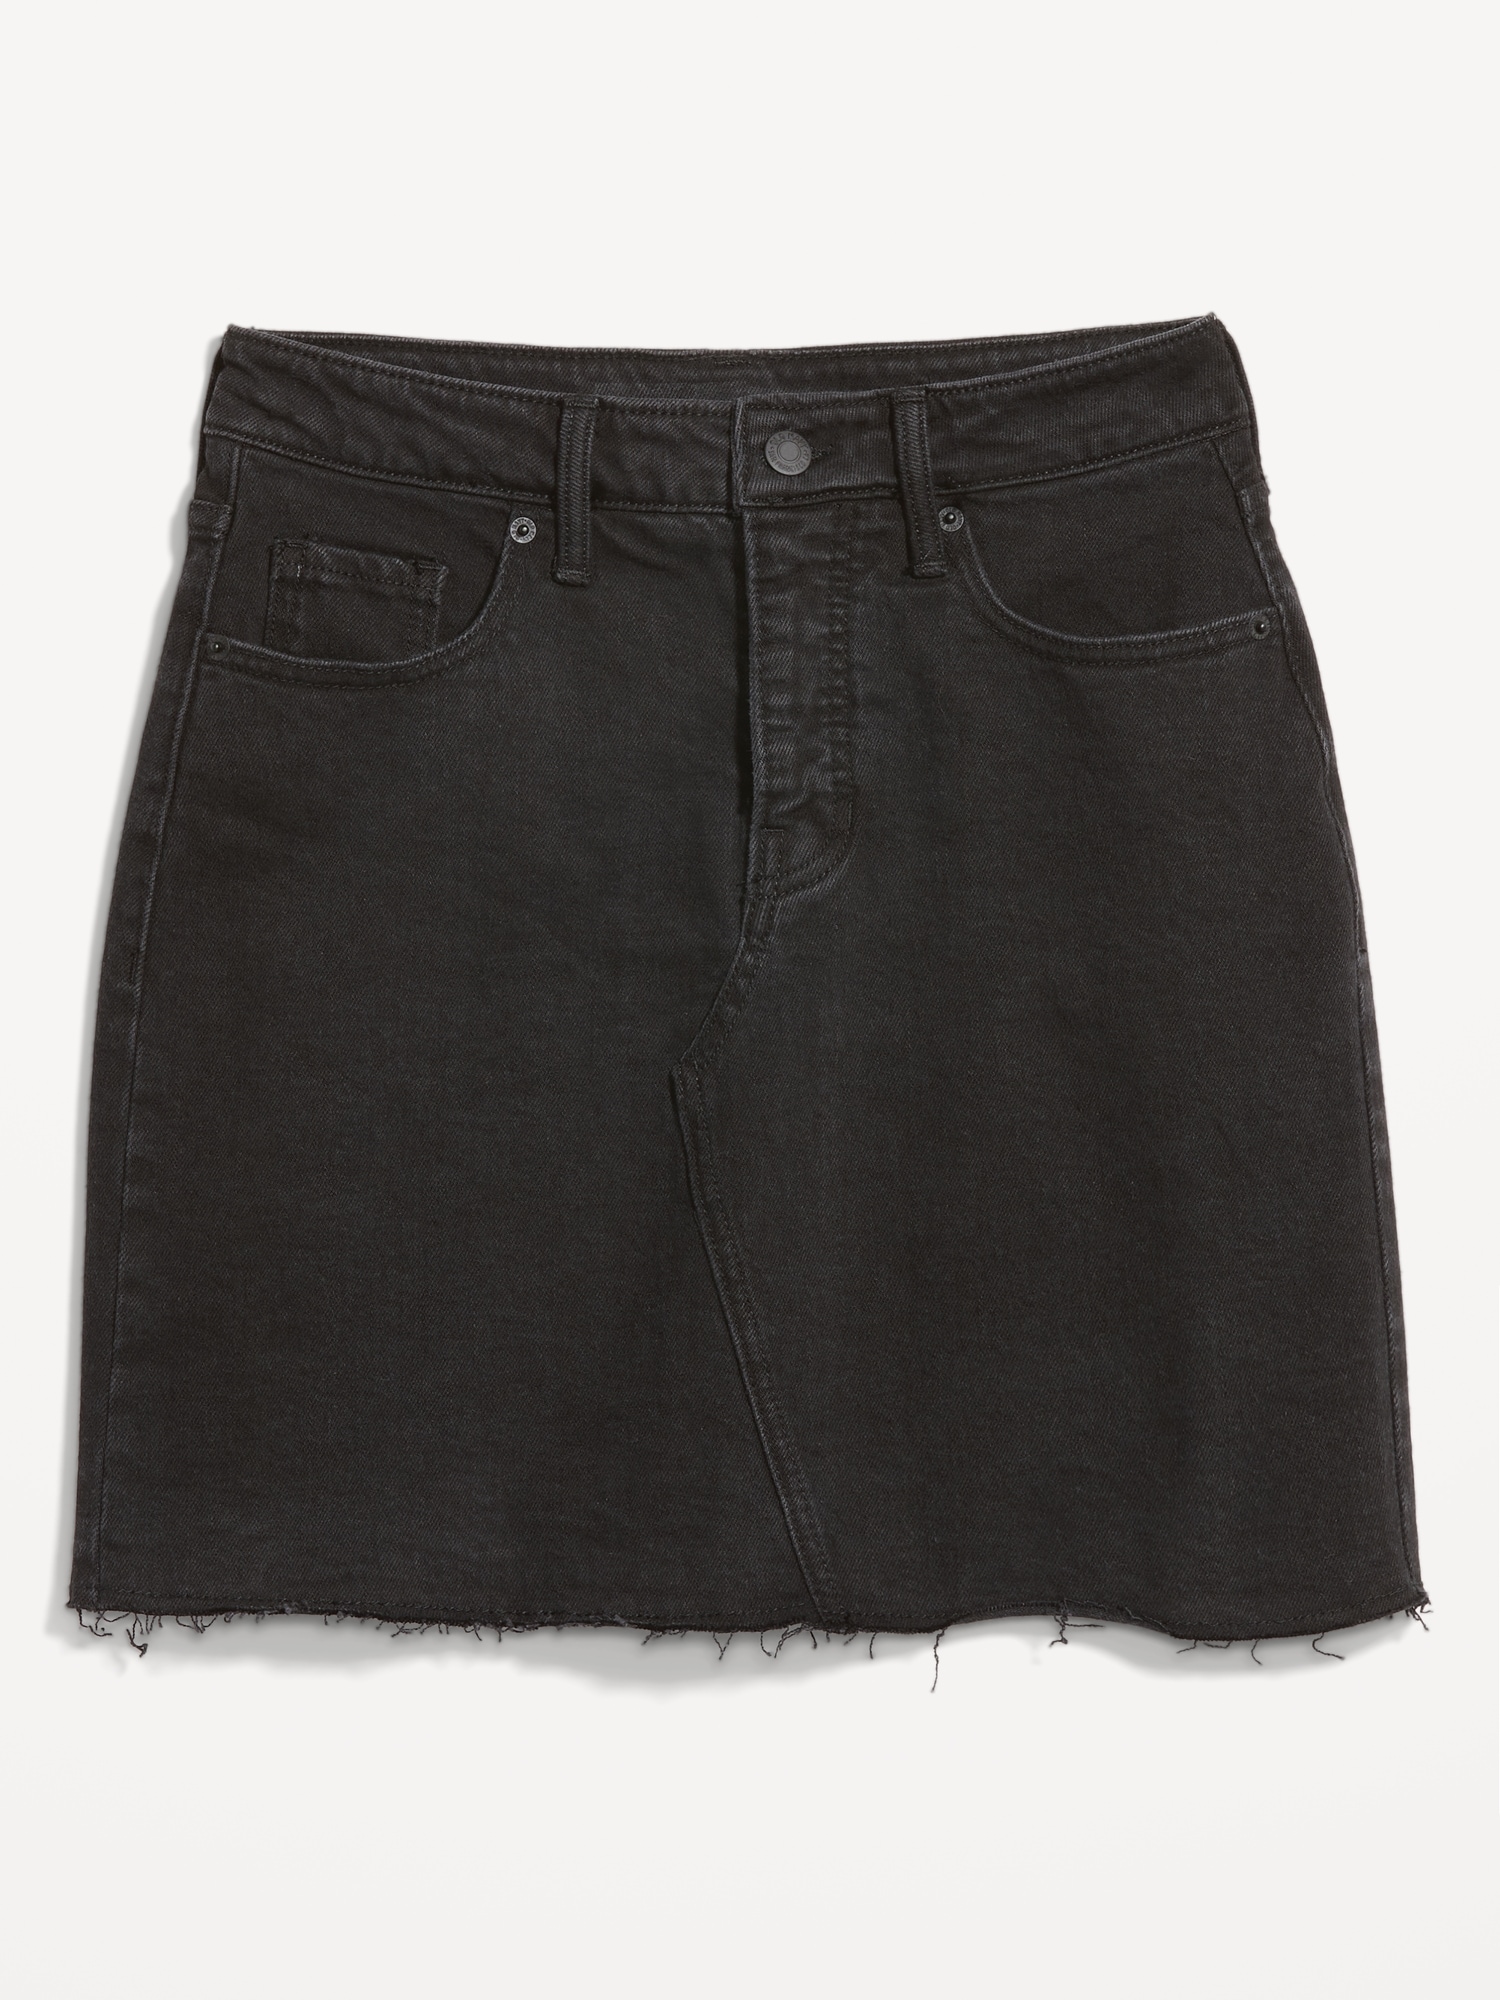 Update more than 151 black high waisted skirt denim latest